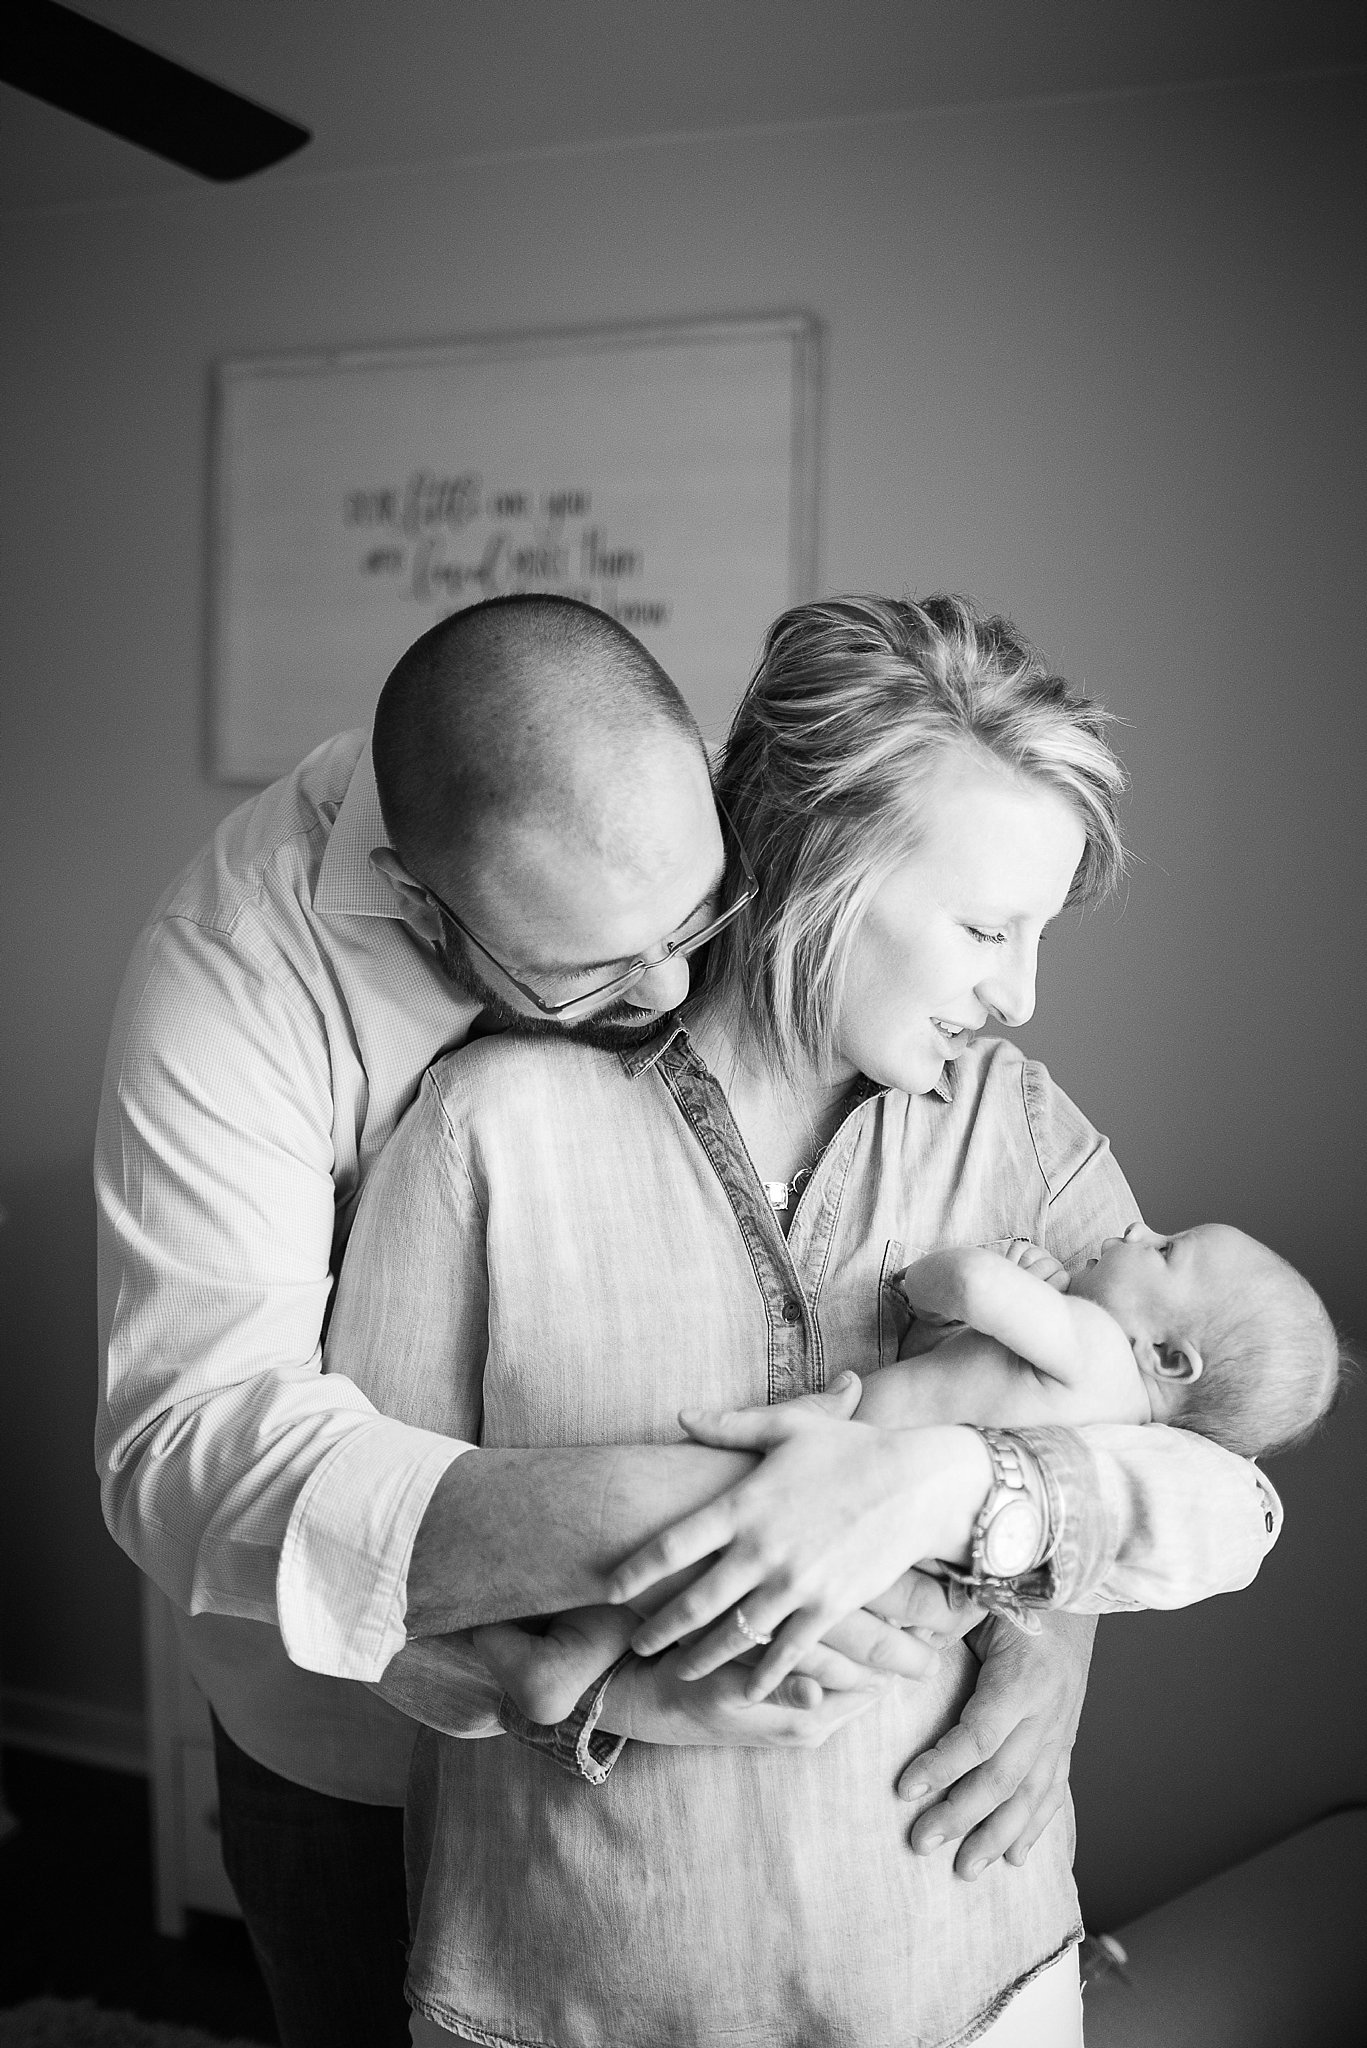 Caiti Garter Photography, Prince George Photographer, Virginia Newborn Photographer, Family Photography, Lifestyle Newborn Photos, Newborn Girl Photos